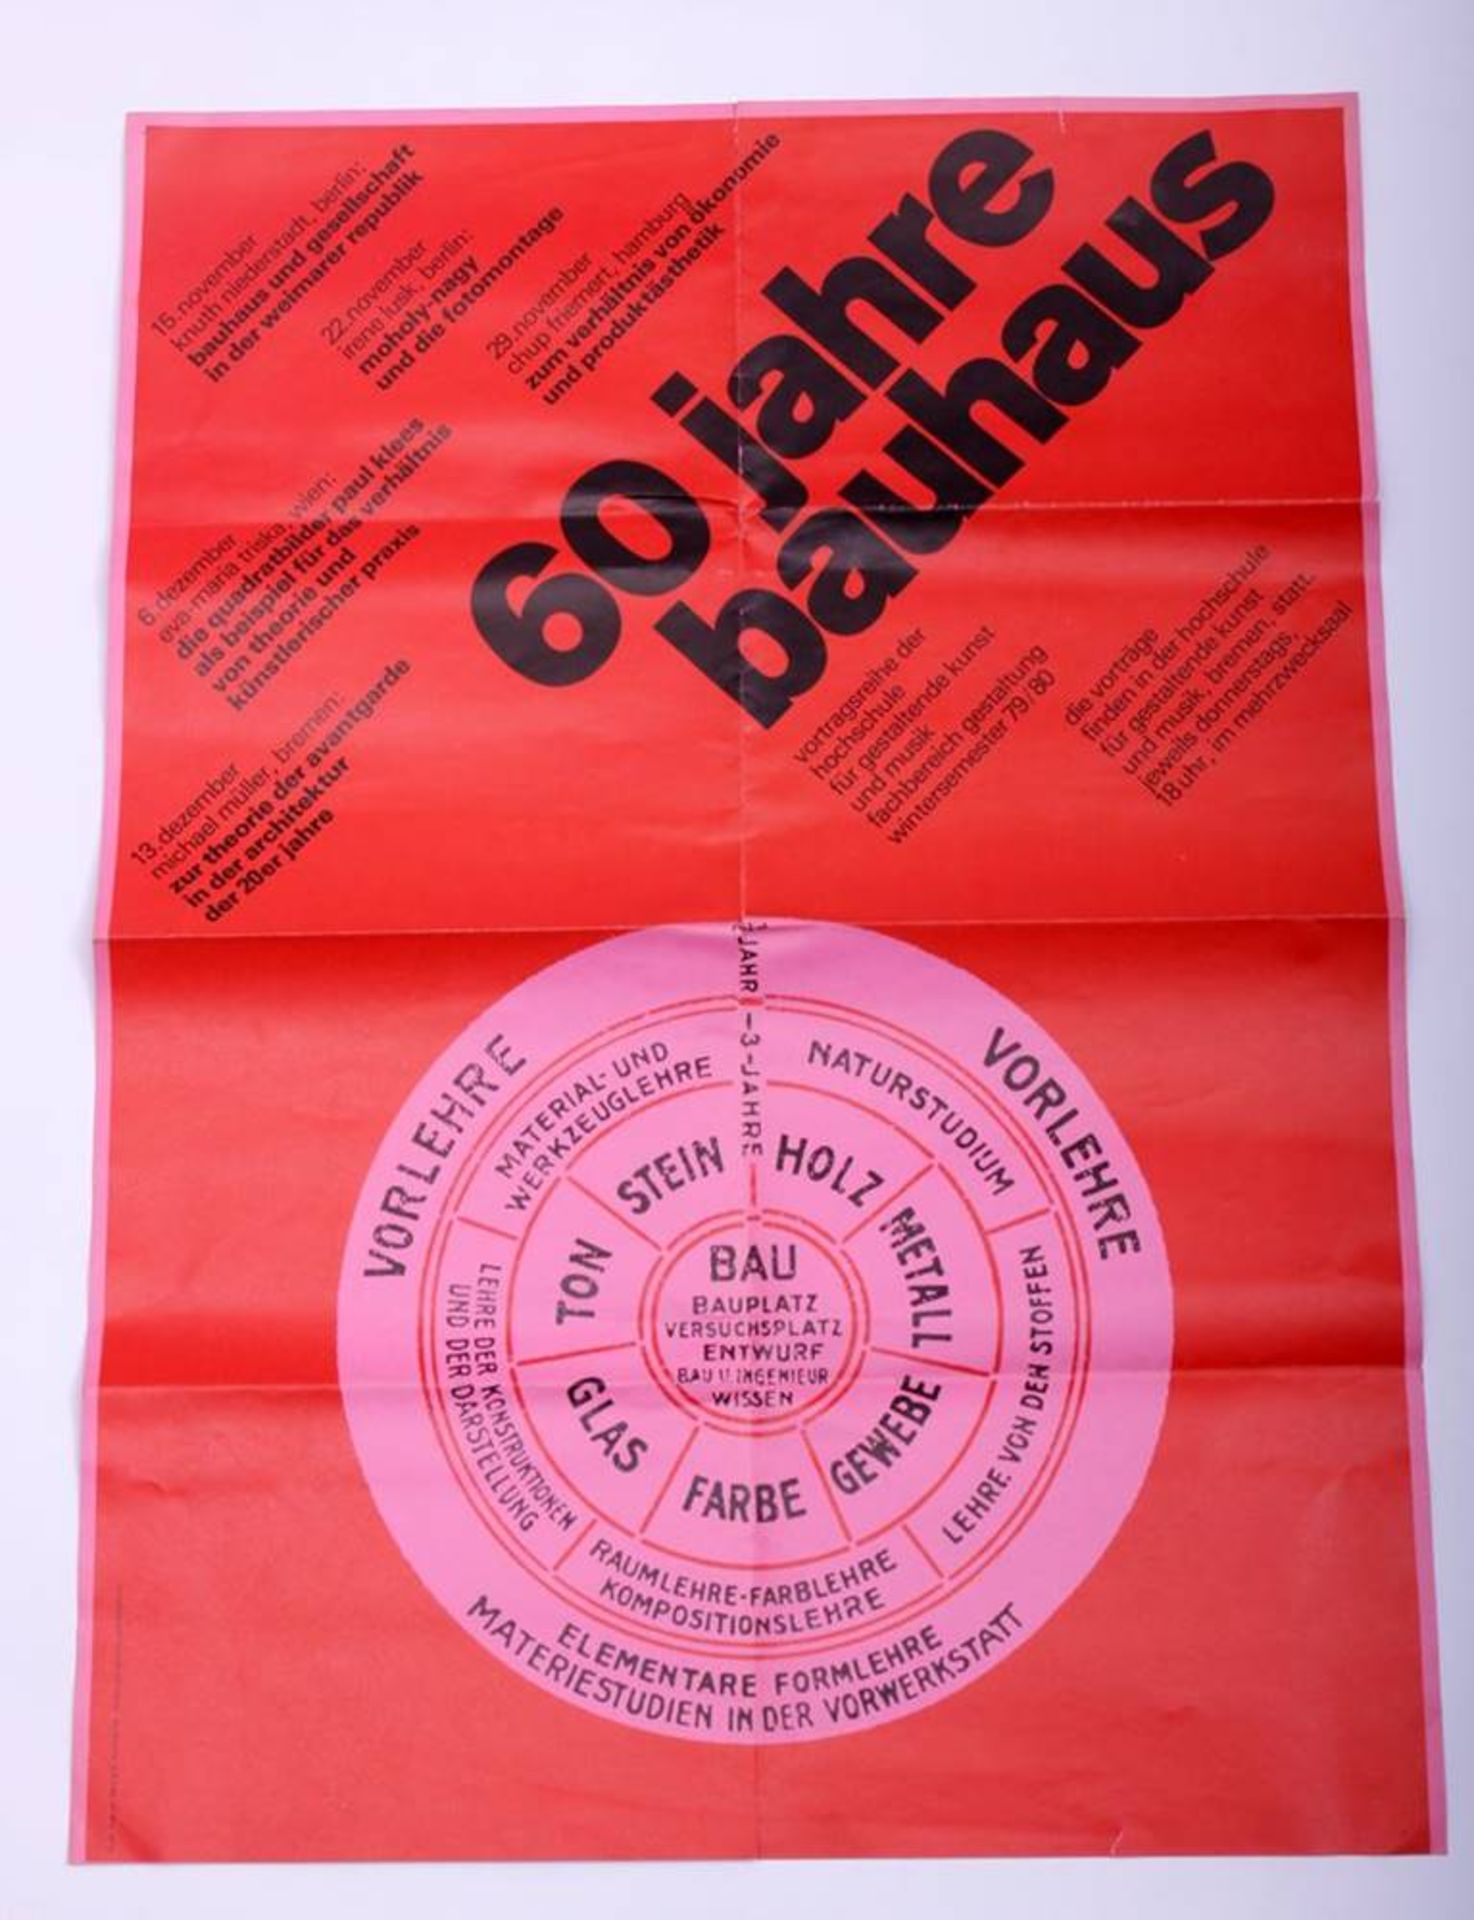 Poster, Bauhaus exhibition "60 Jahre Bauhaus" (60 years of Bauhaus), printed by hfgkum, designed